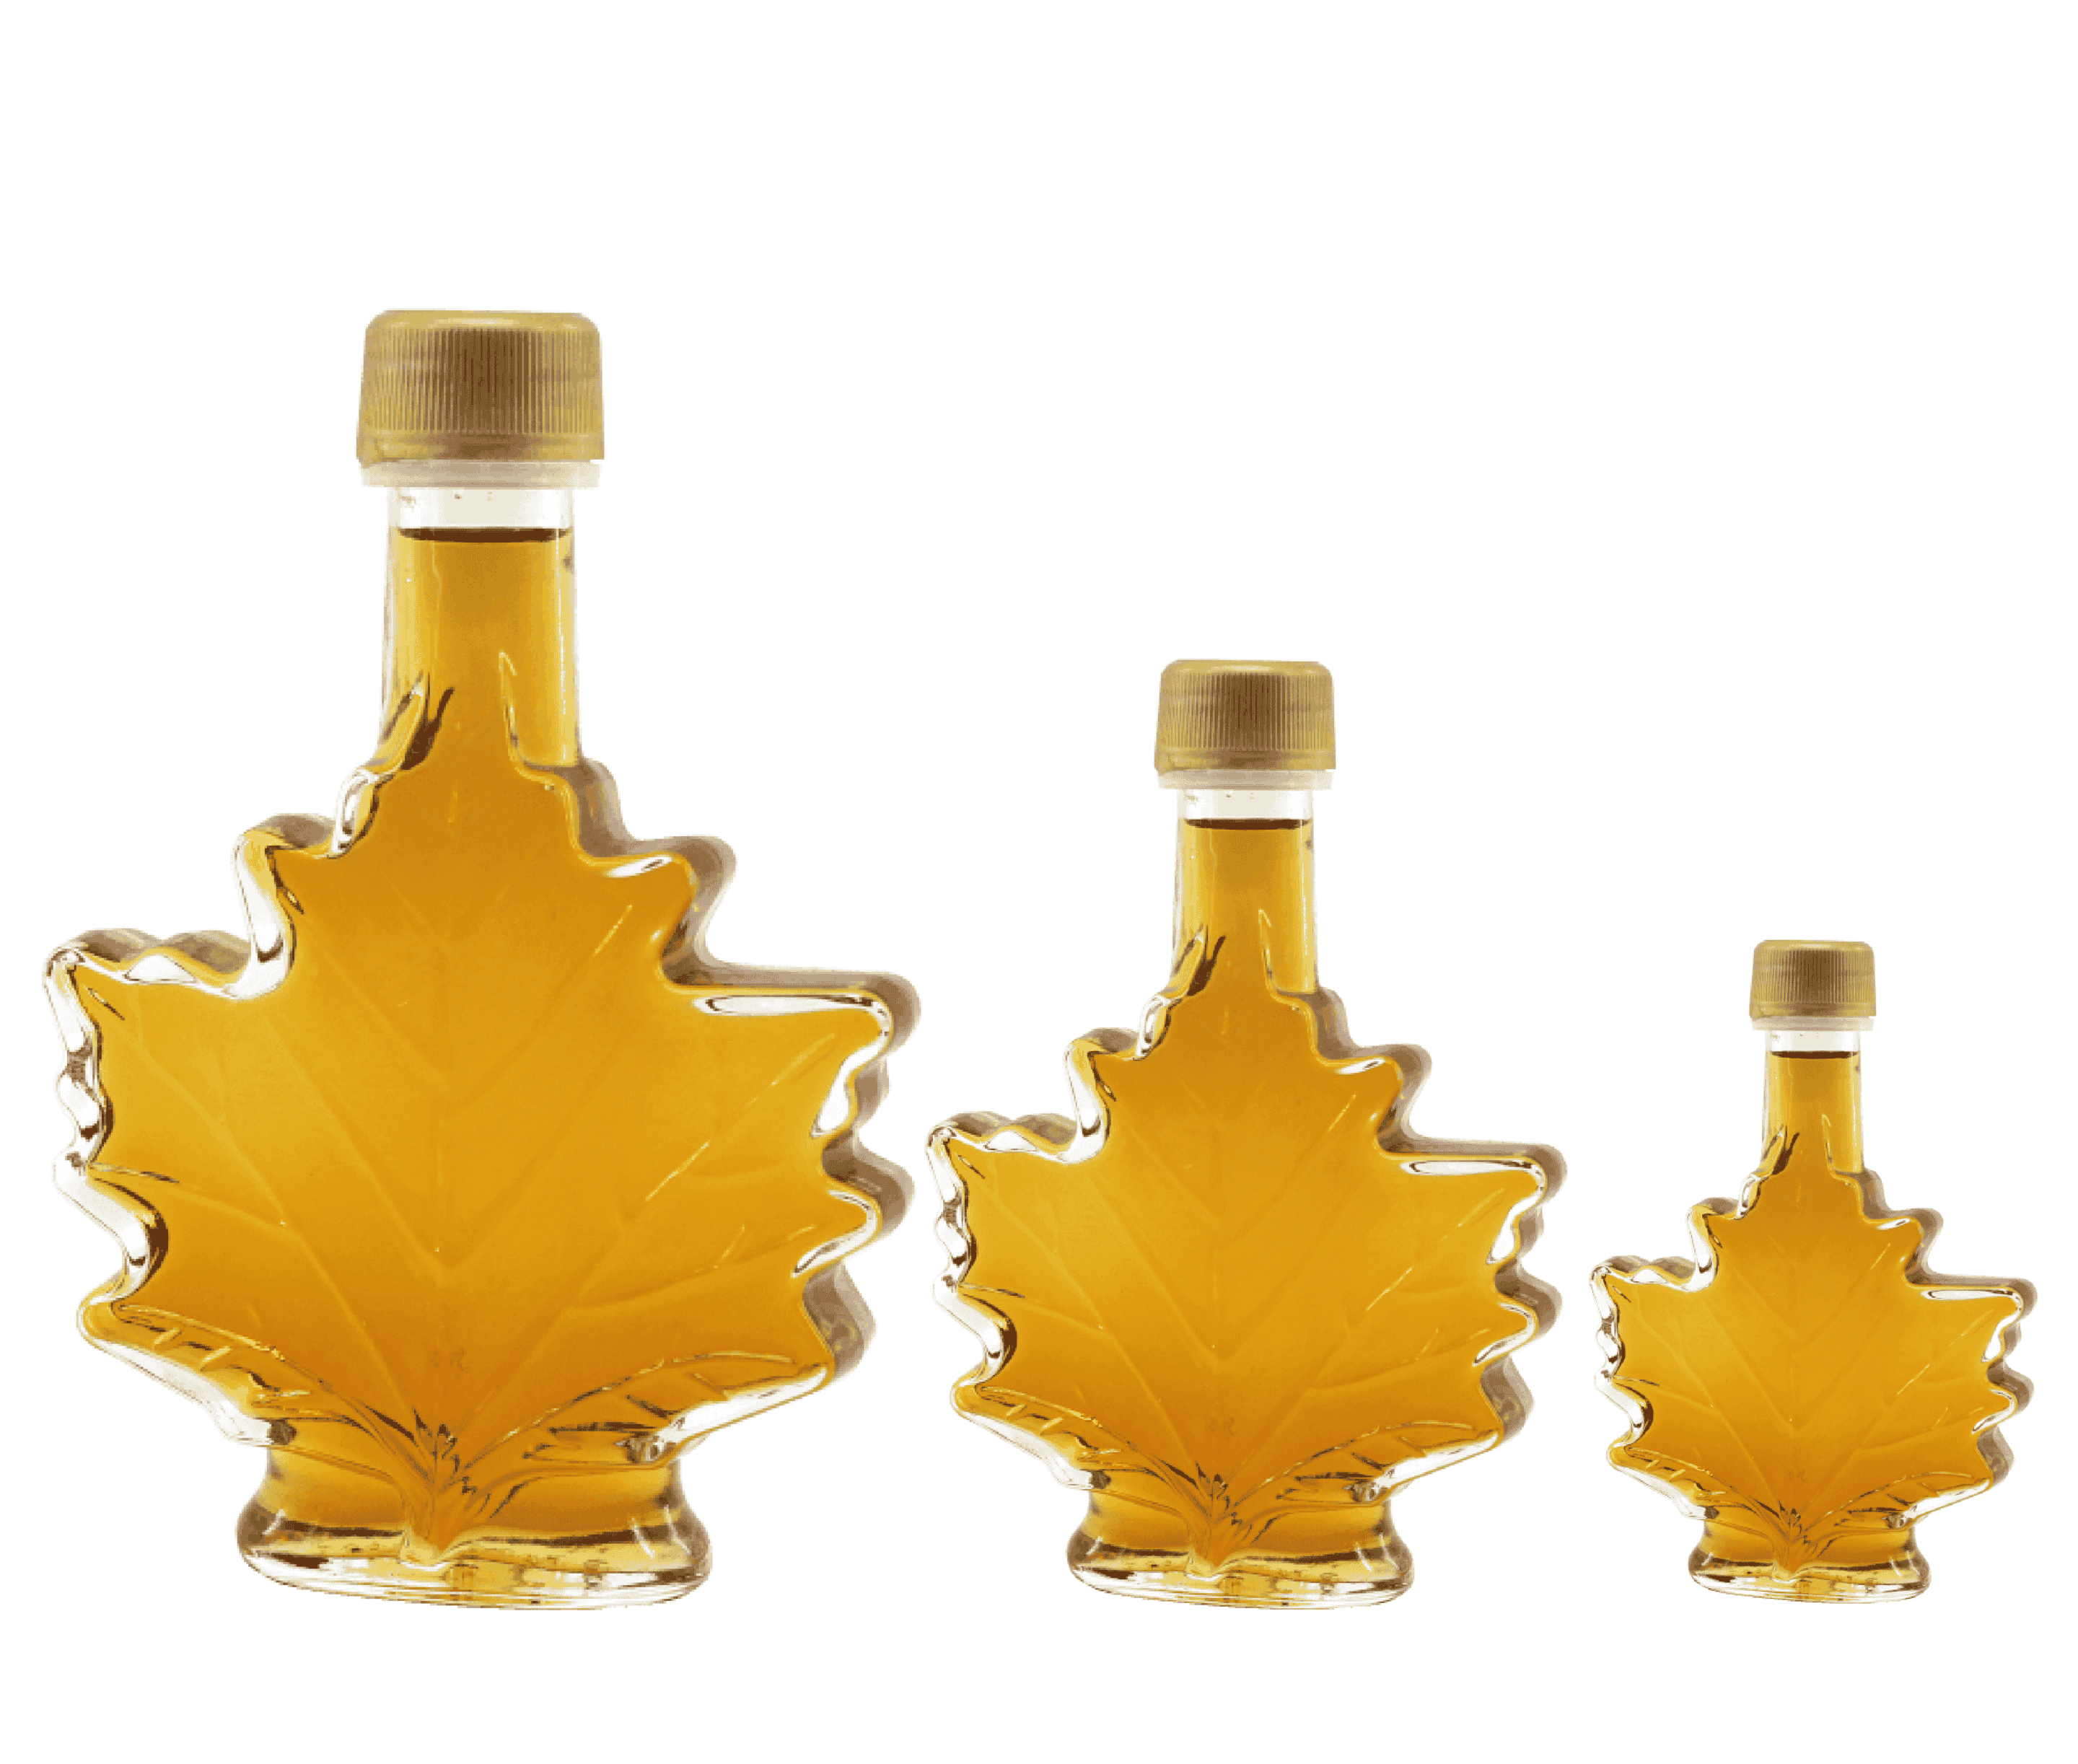 3 maple leaf-shaped maple syrup bottles